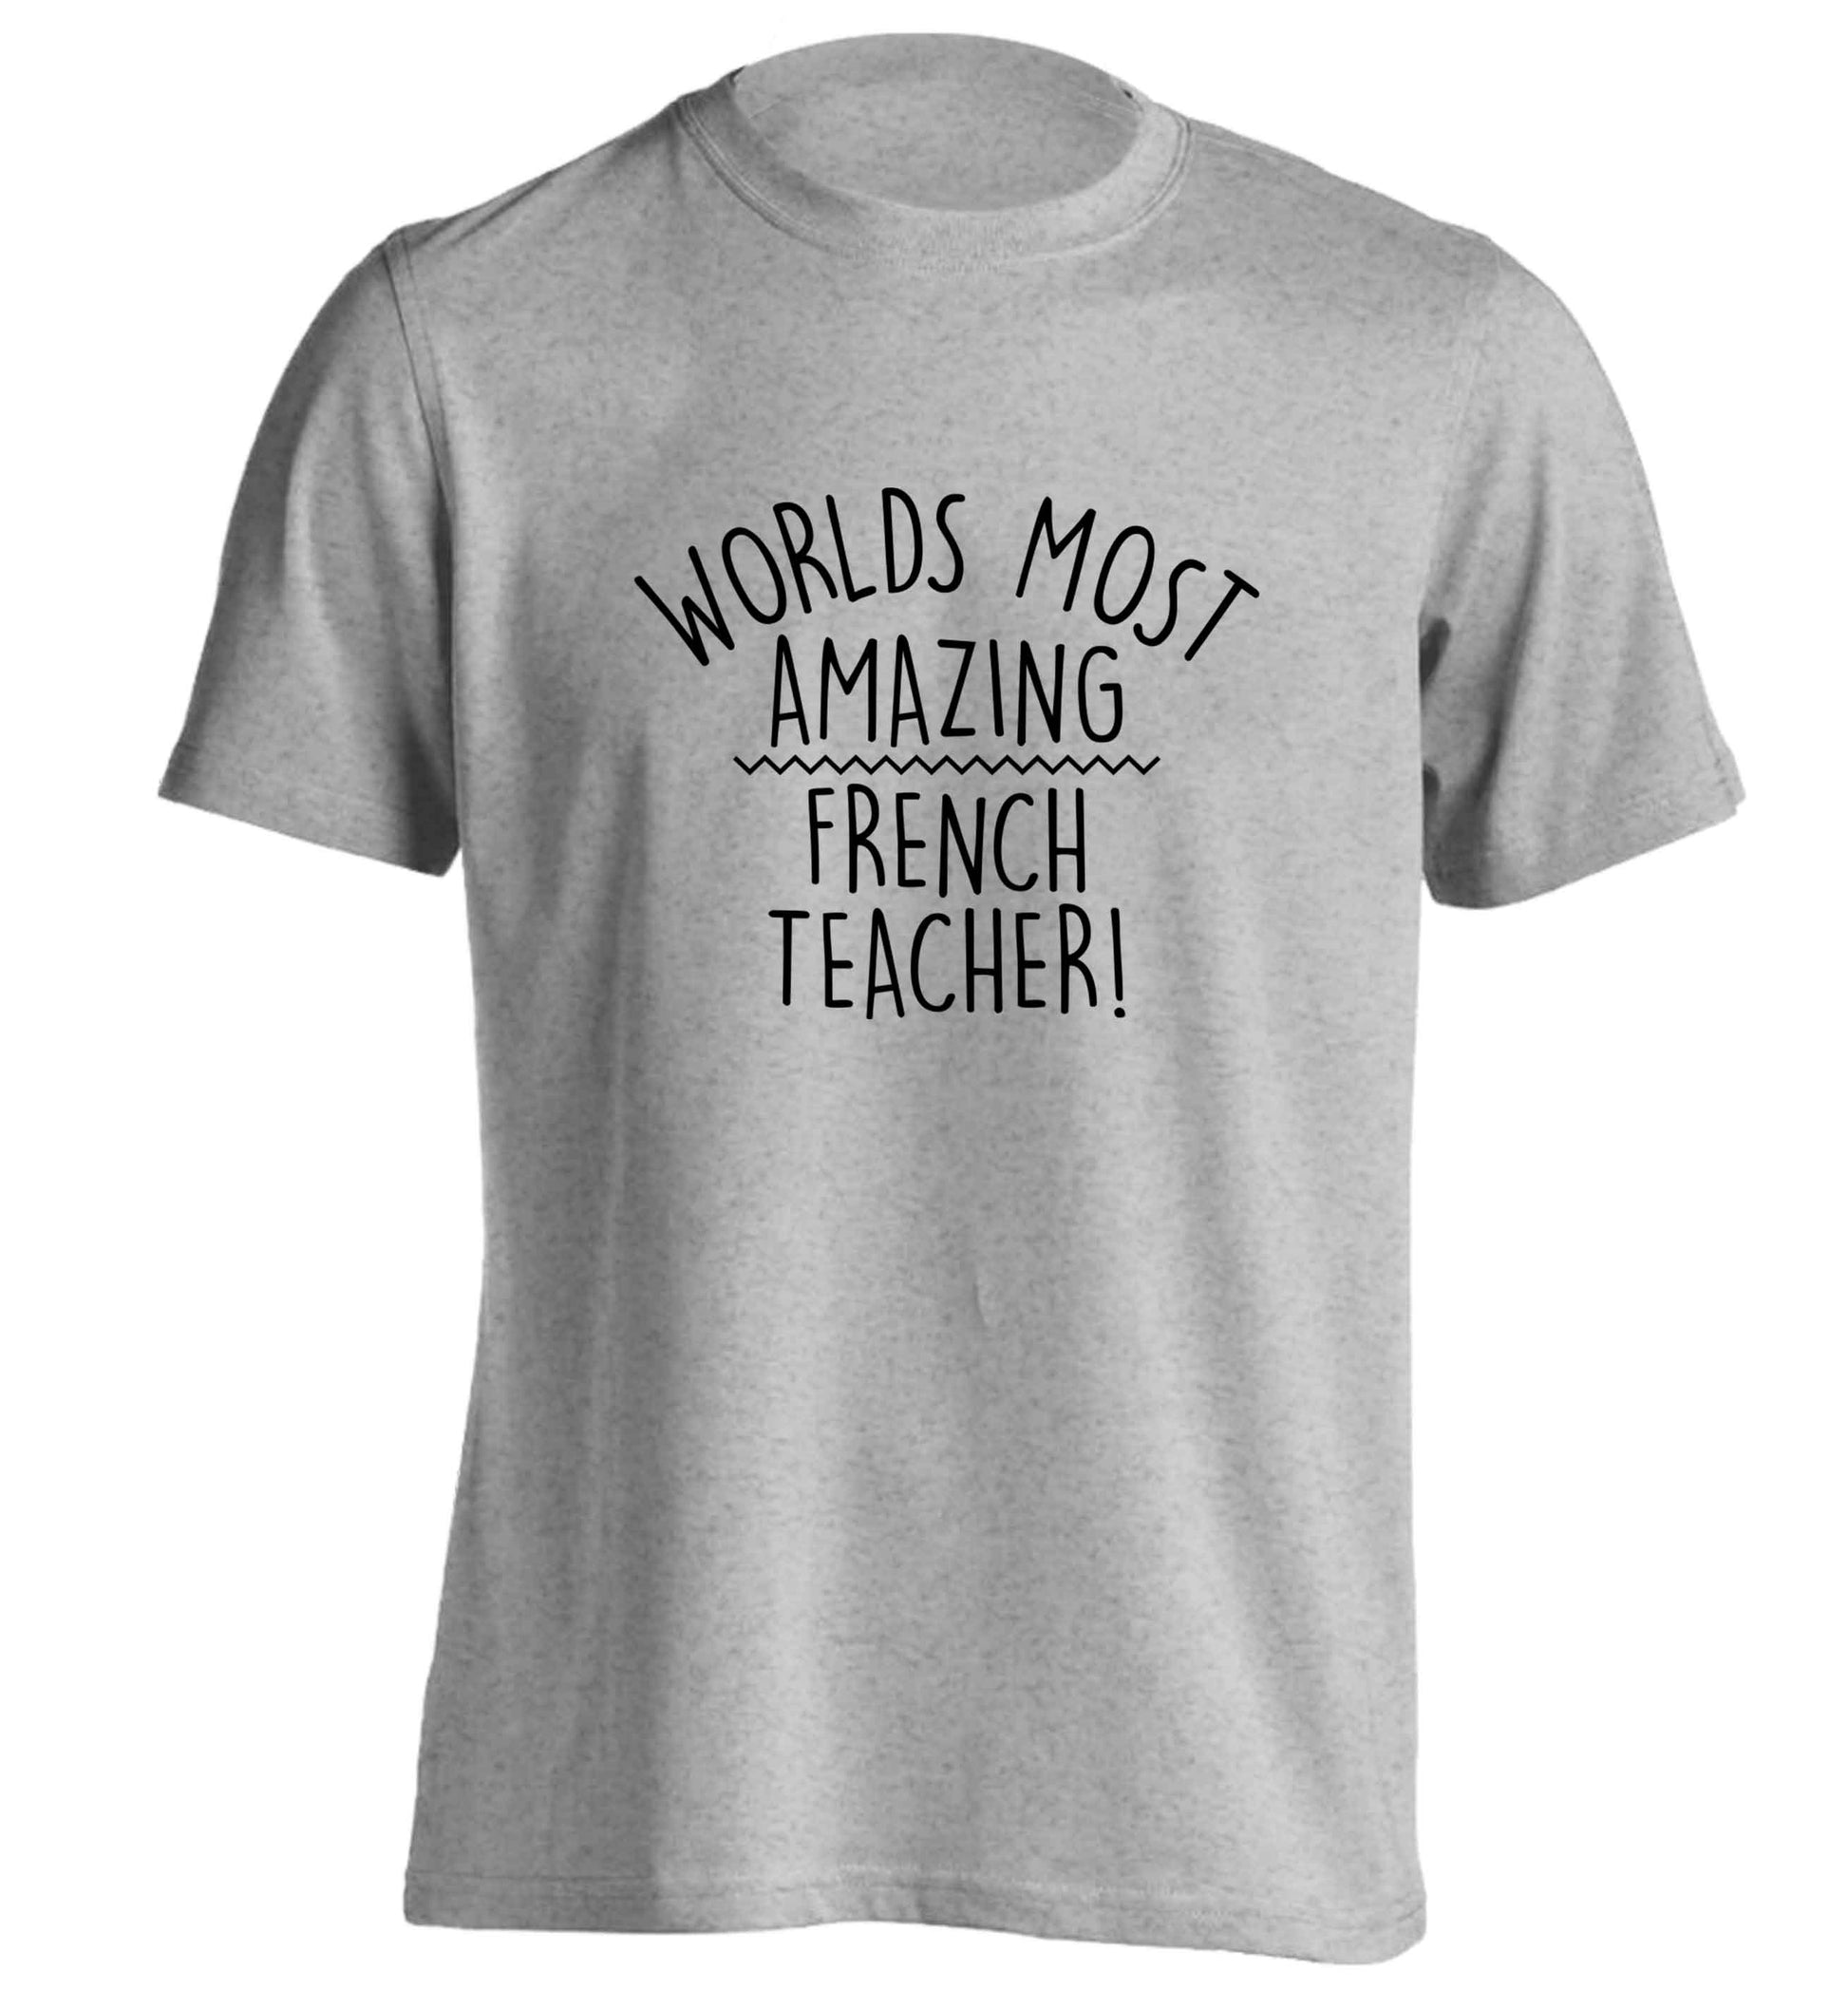 Worlds most amazing French teacher adults unisex grey Tshirt 2XL